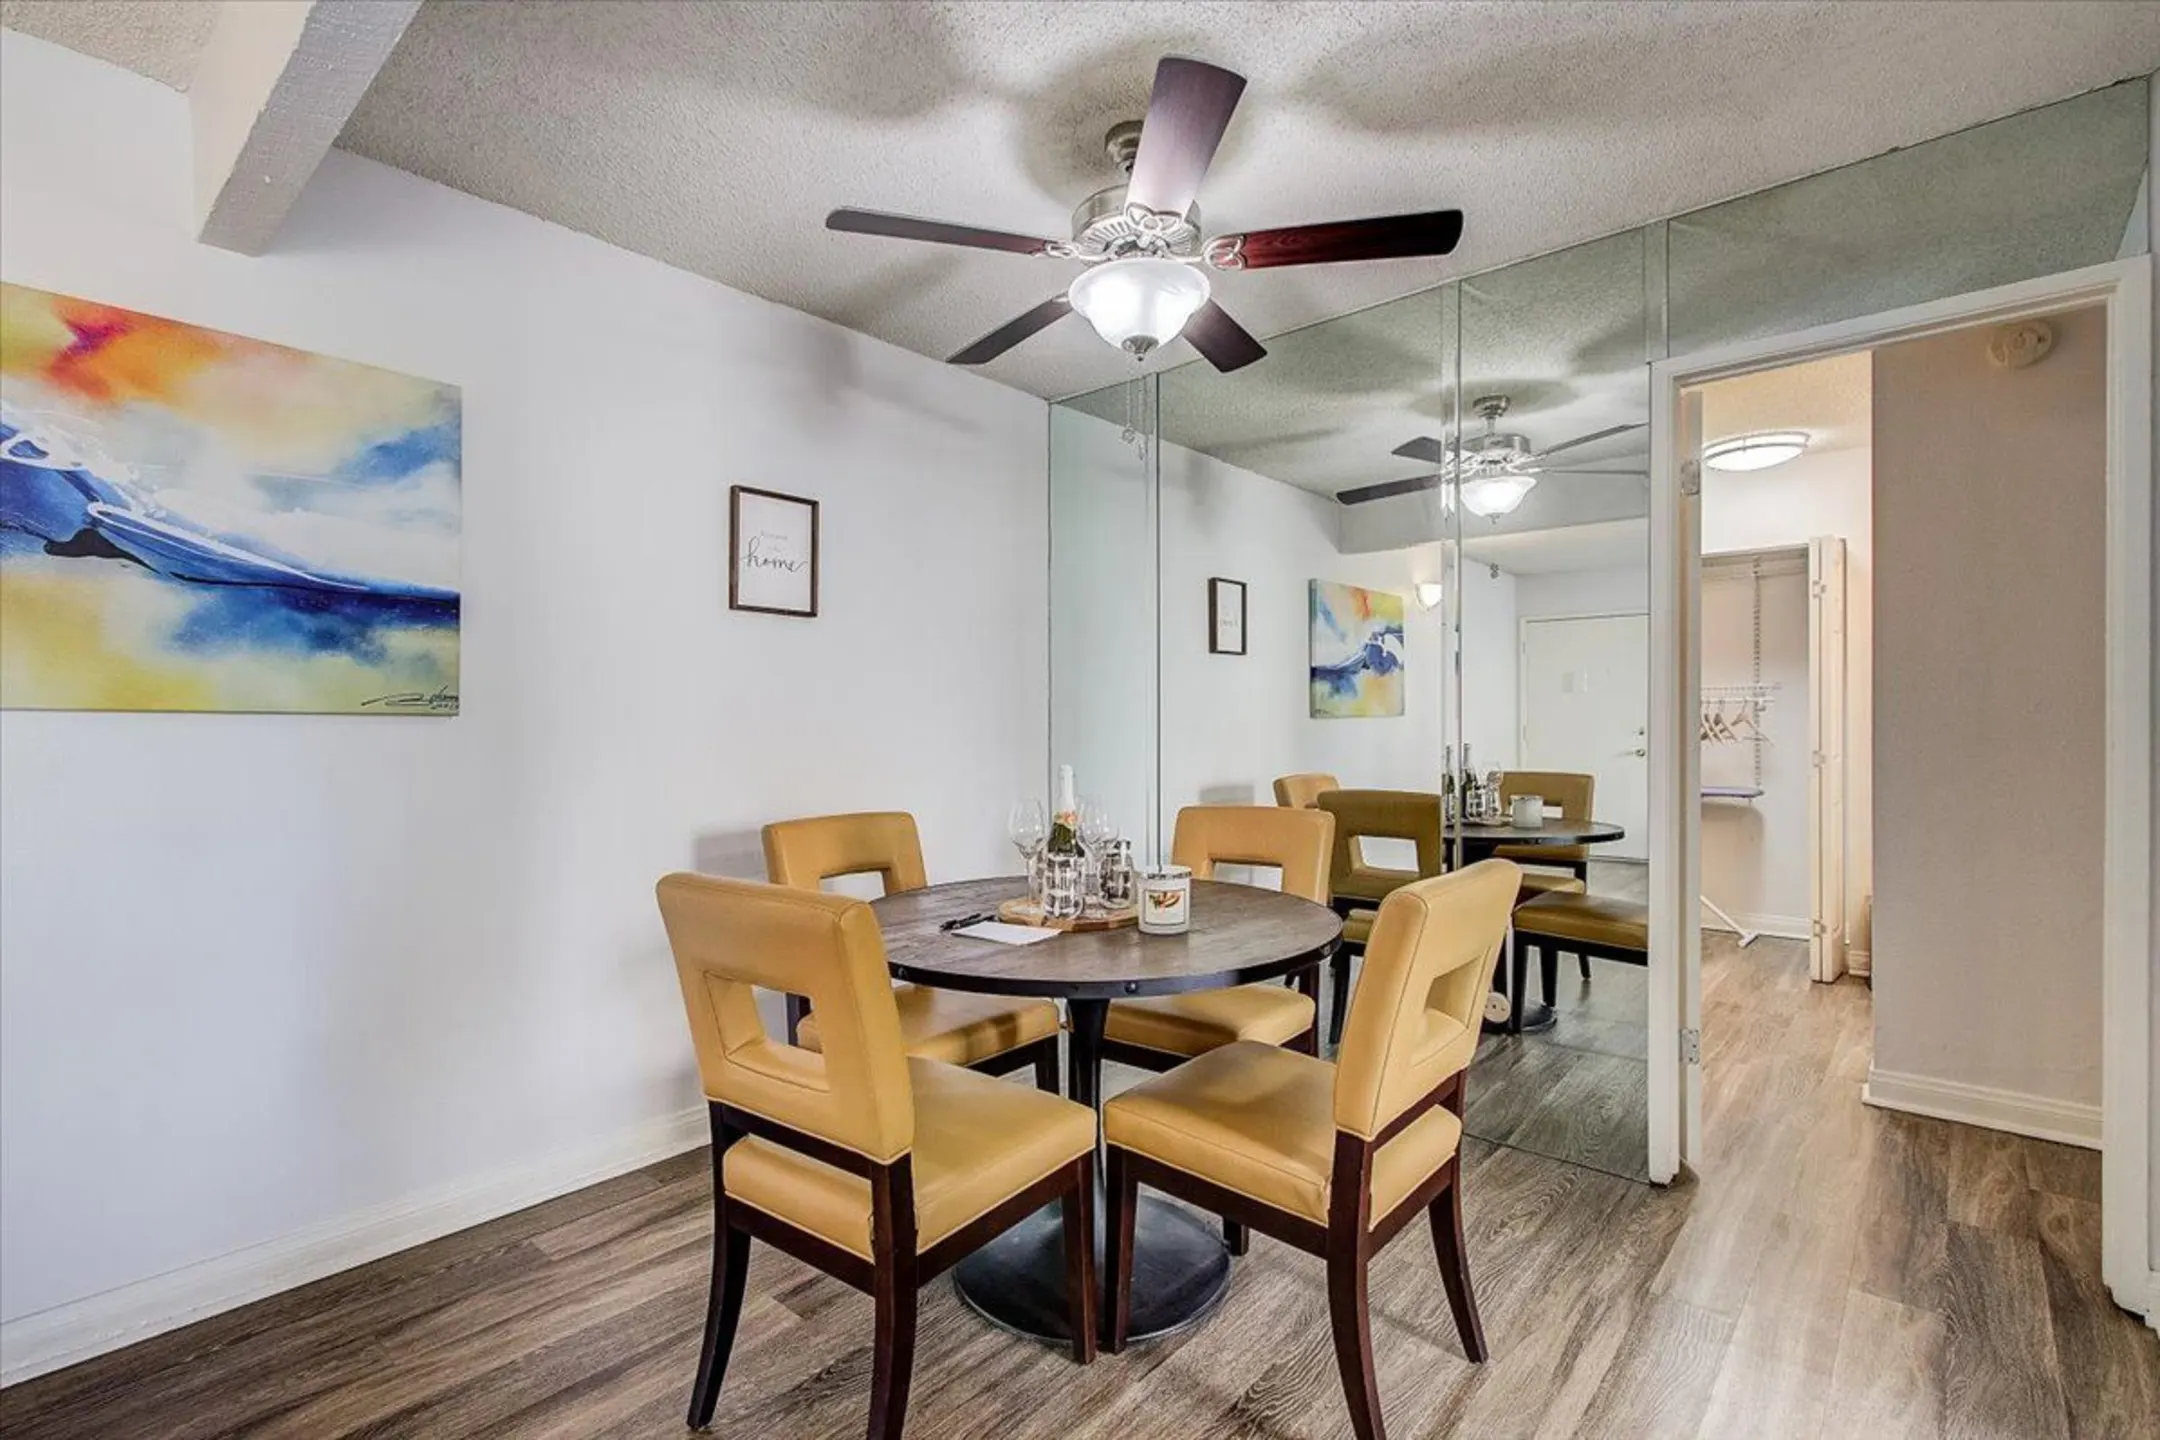 Dining Room - El Cordova Apartments - Carson, CA